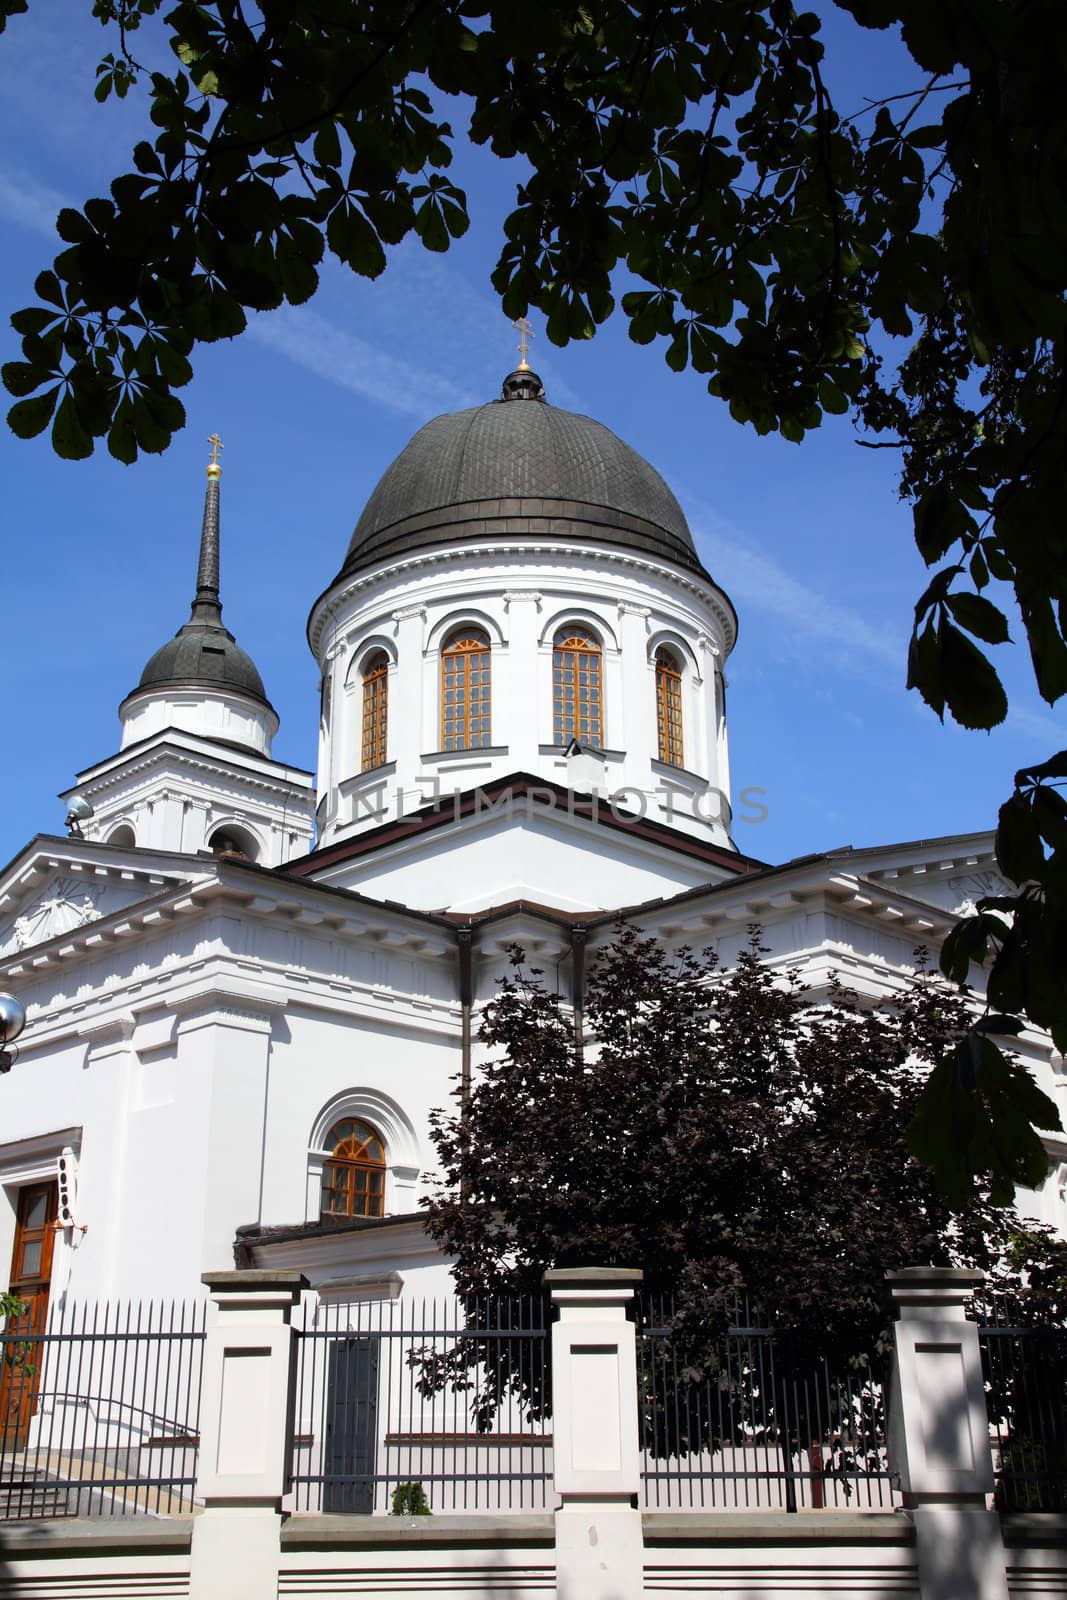 Bialystok, Poland - city architecture. Podlaskie province. Orthodox cathedral of Saint Nicholas.